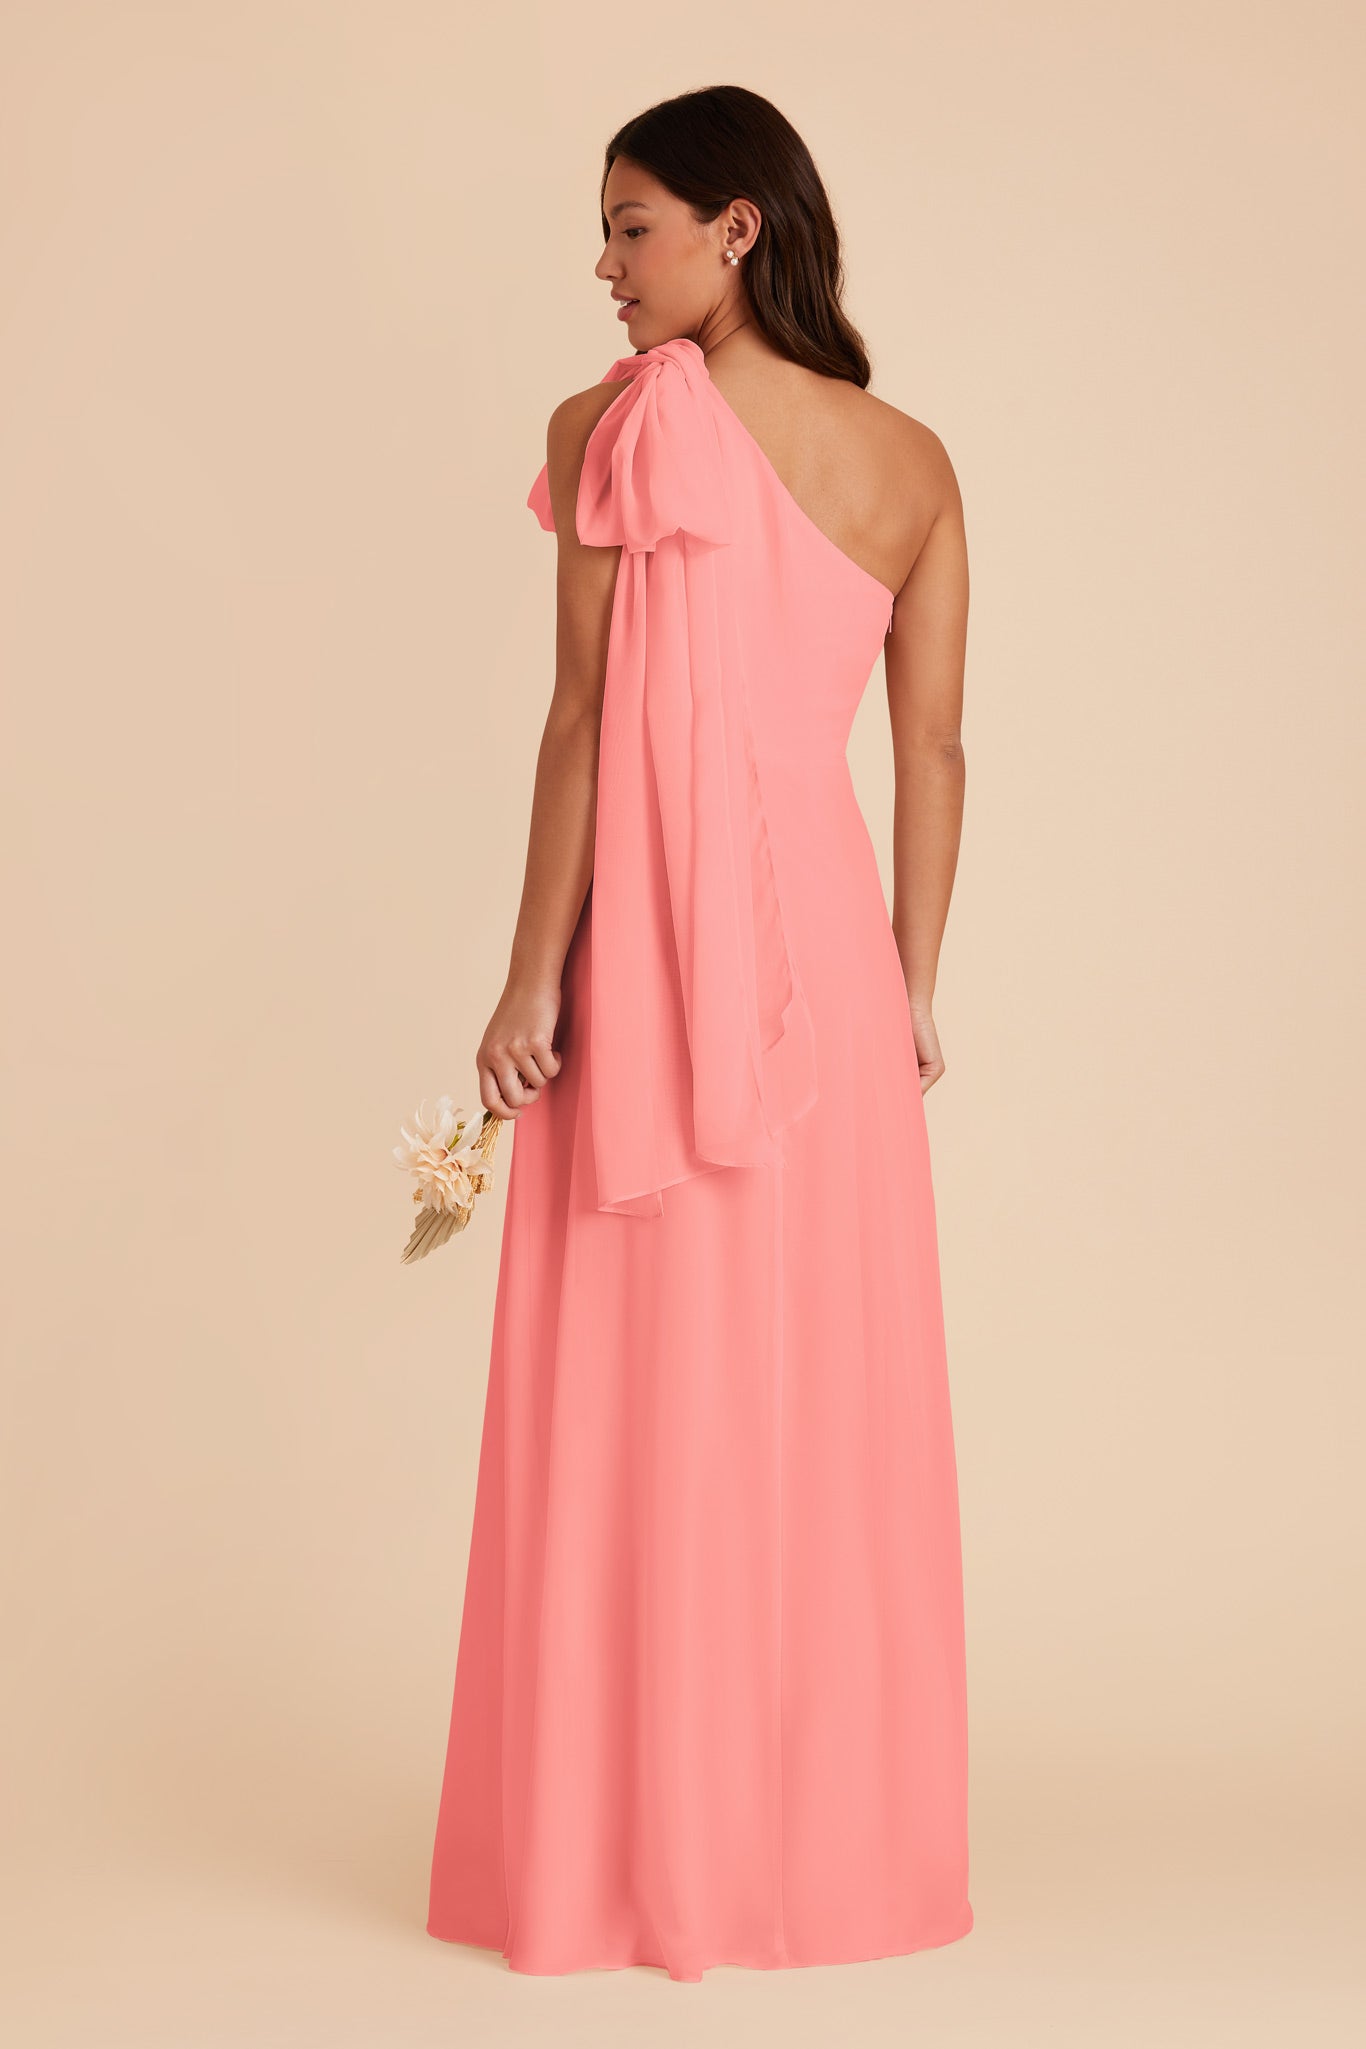 Coral Pink Melissa Chiffon Dress by Birdy Grey